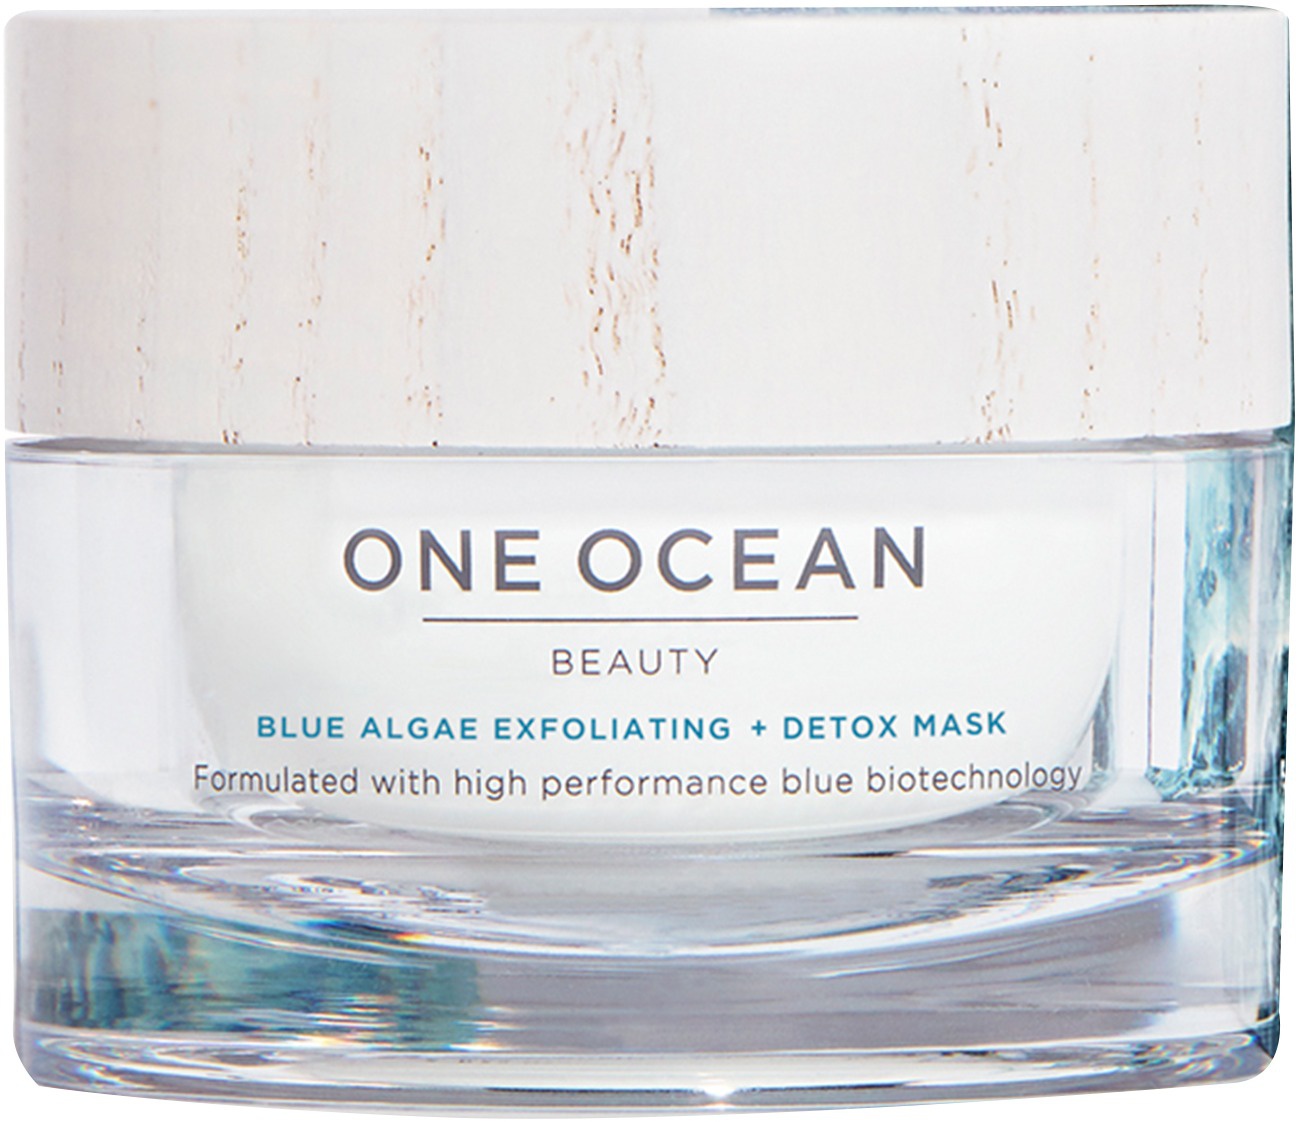 One Ocean Beauty Blue Algae Exfoliating + Detox Mask